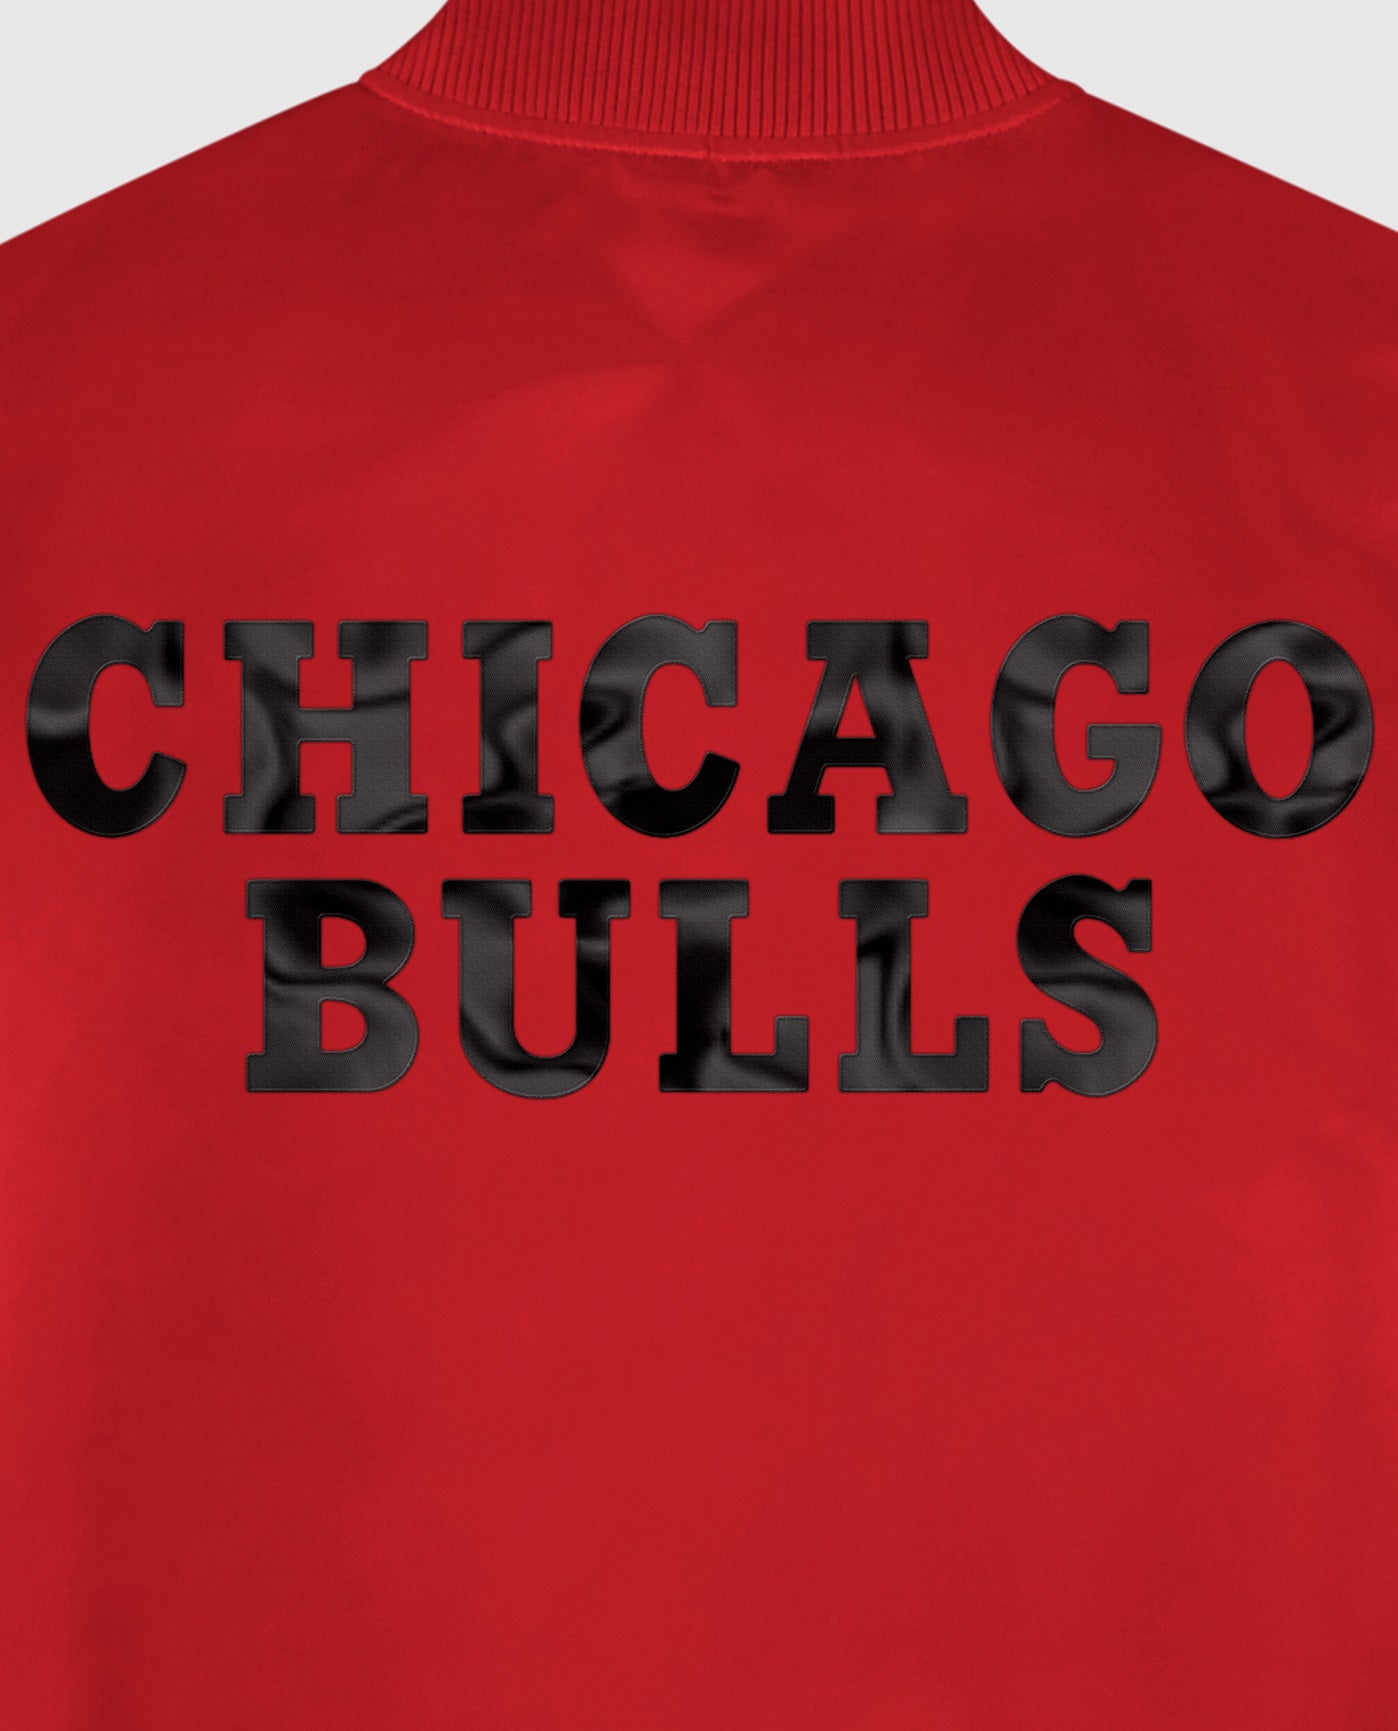 Lids Chicago Bulls Starter Force Play Satin Full-Snap Varsity Jacket - Red